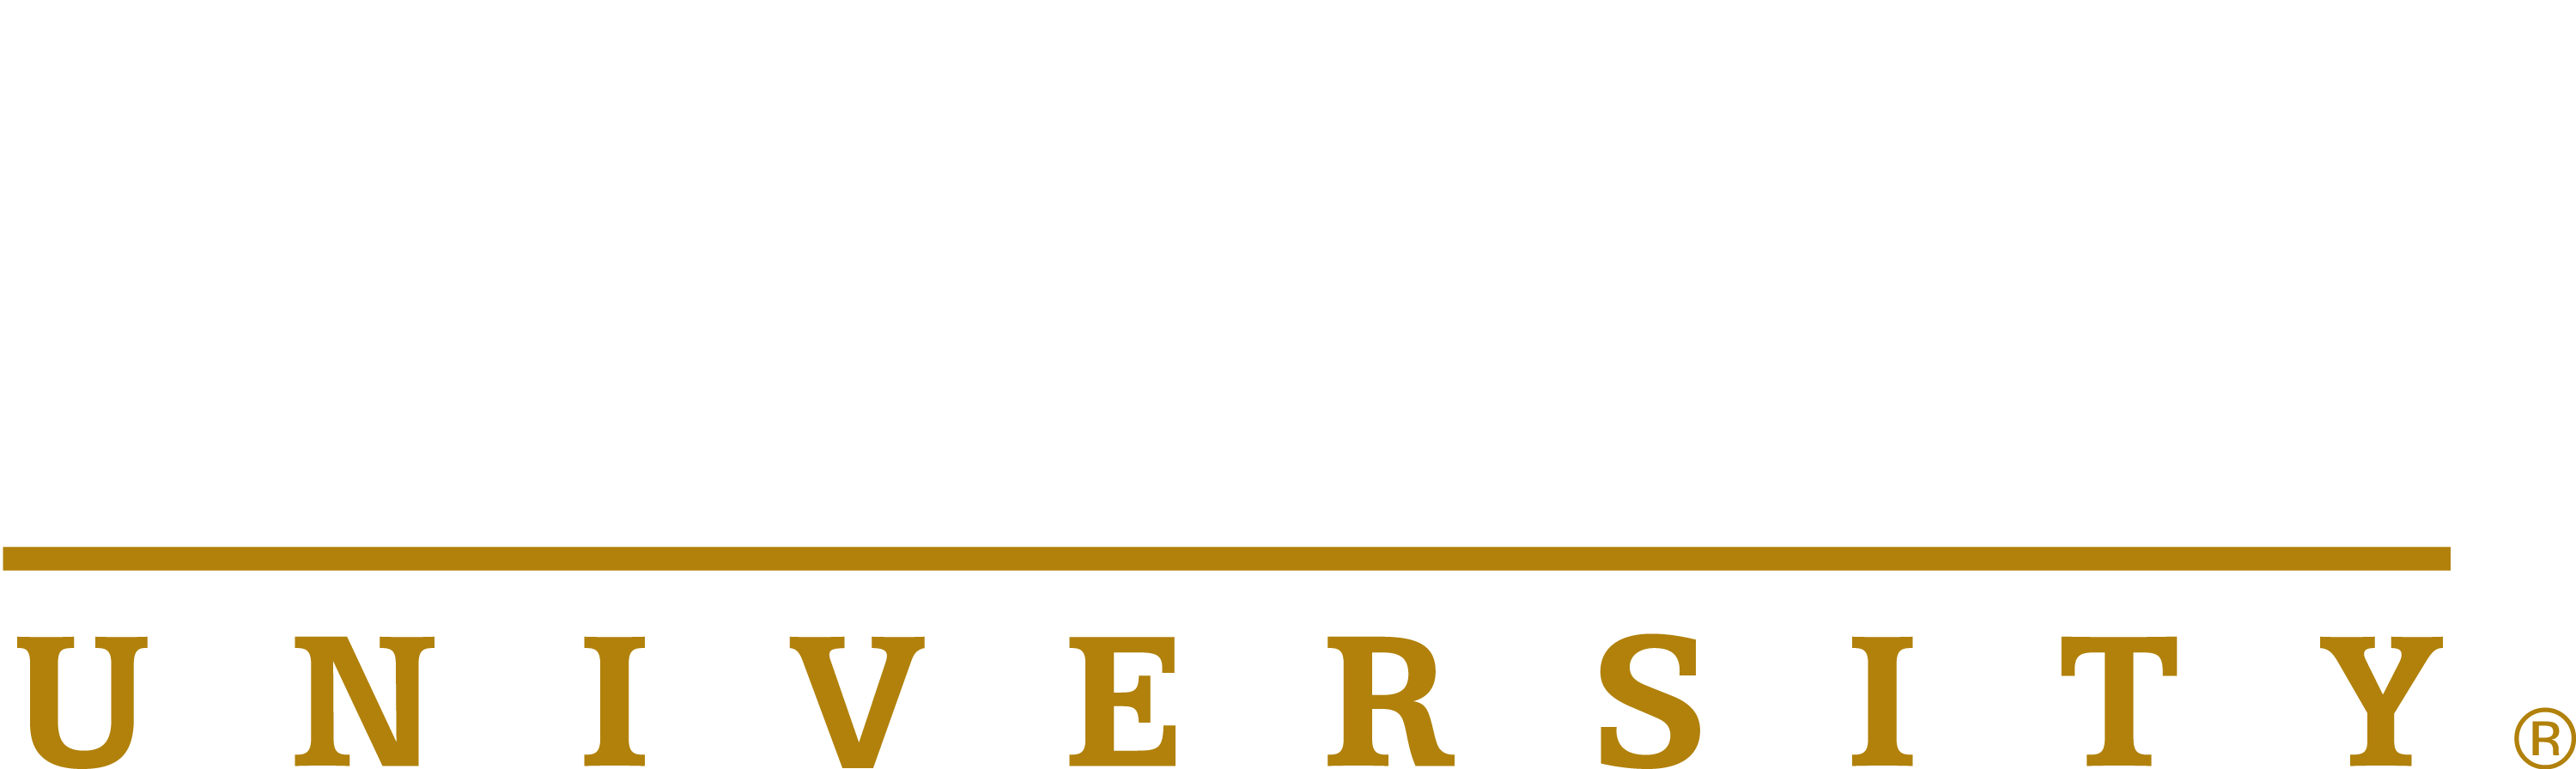 Purdue University Logo